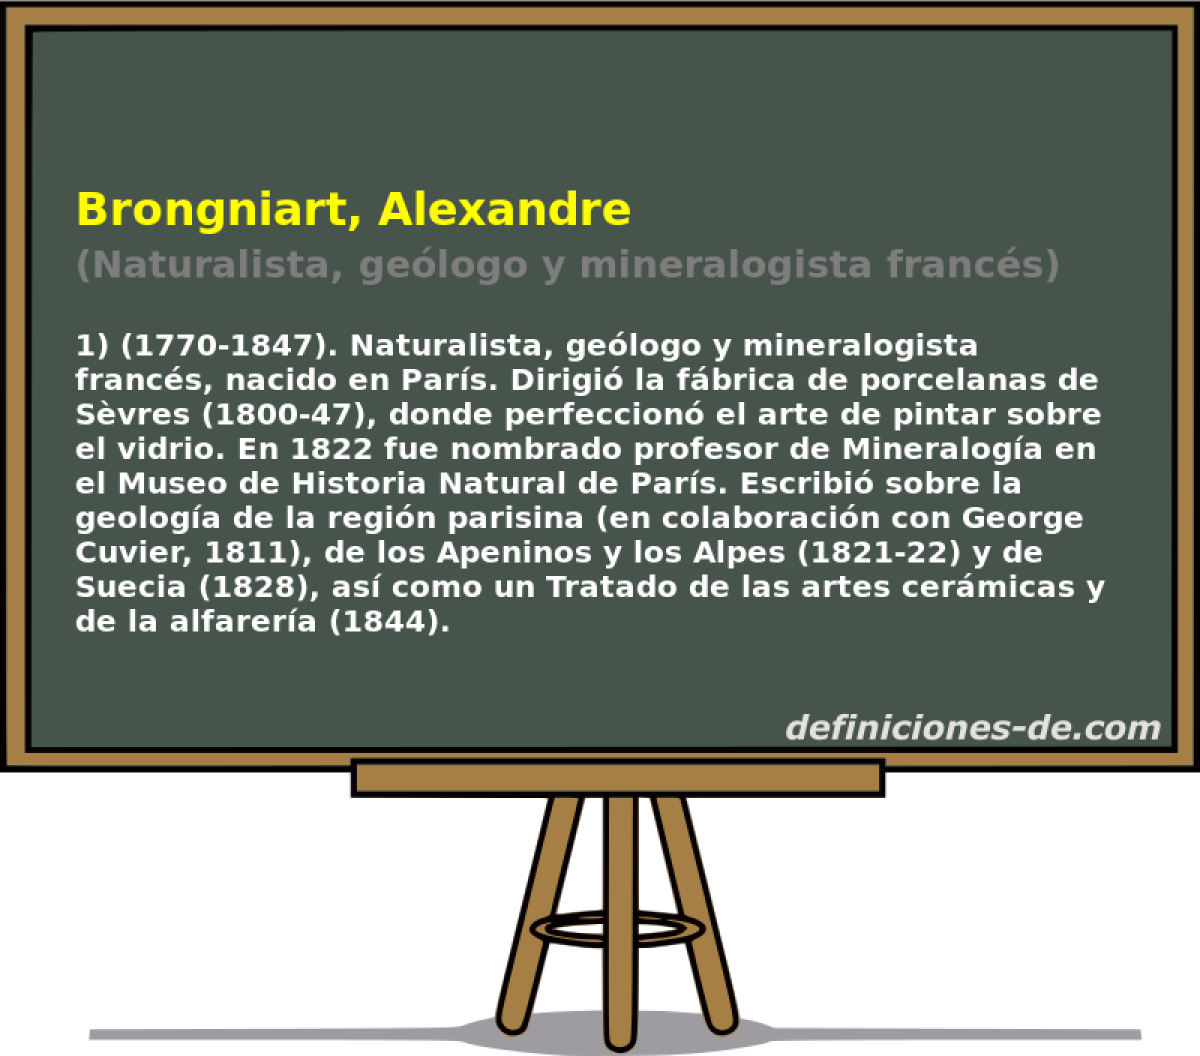 Brongniart, Alexandre (Naturalista, gelogo y mineralogista francs)